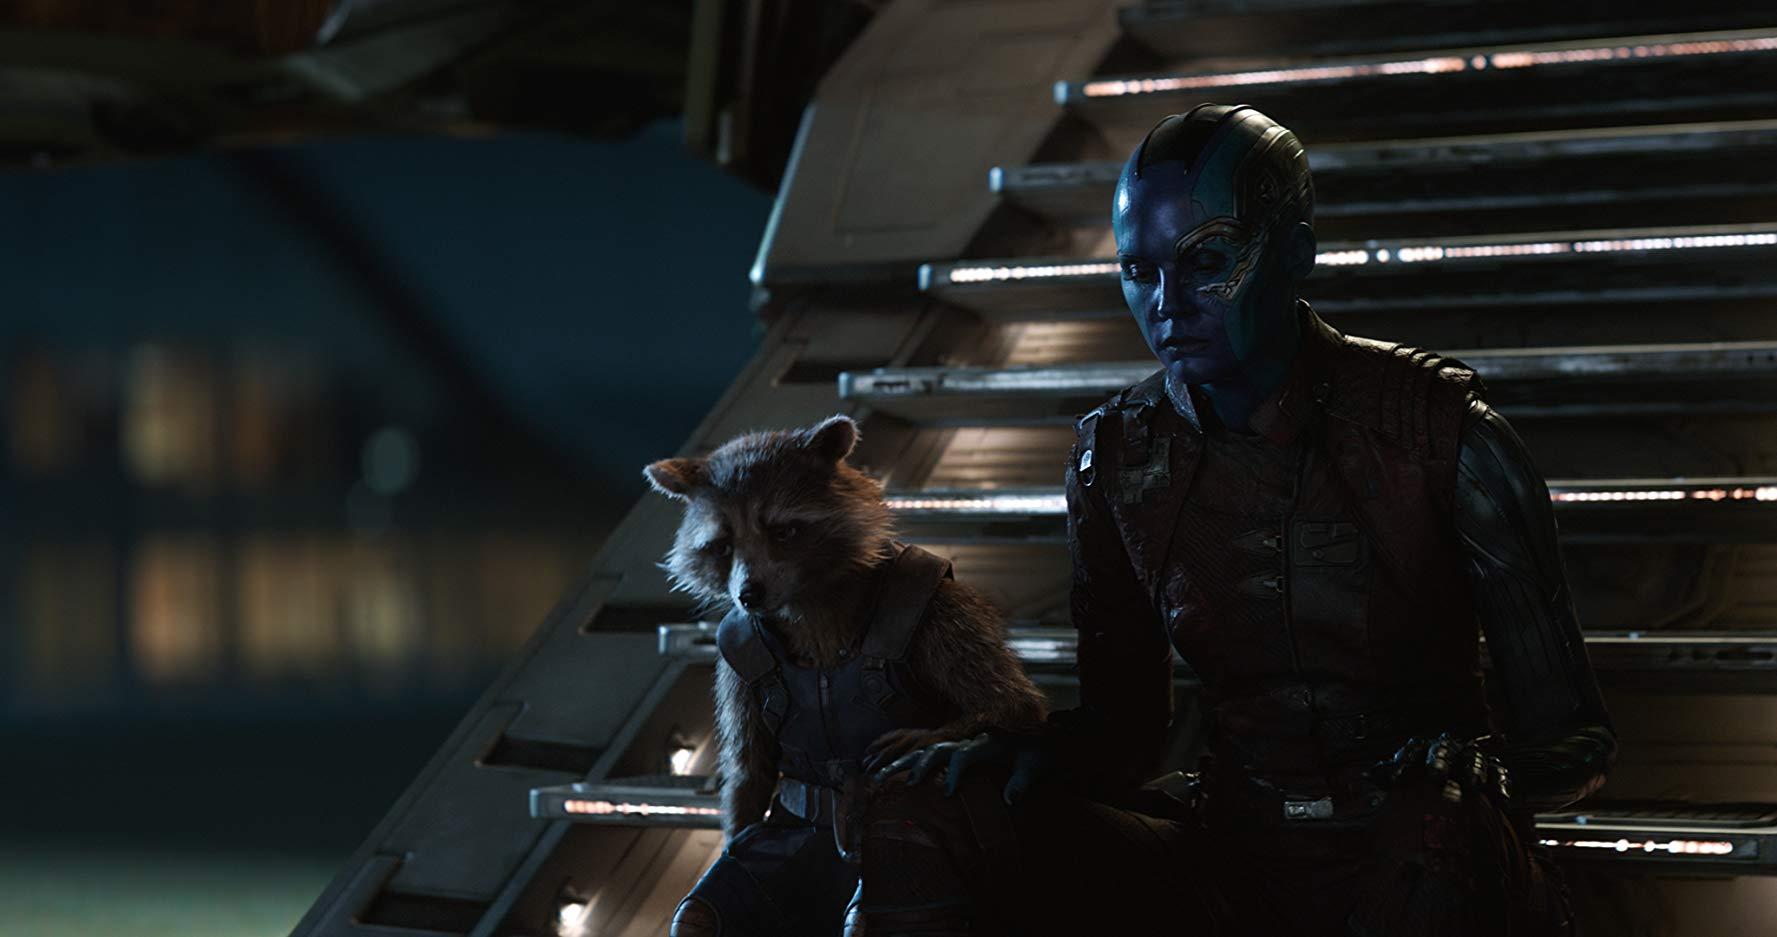 Titanic ถอยไป! “Avengers: Endgame” รายได้พุ่งแซง แถมไล่หลัง Avatar กระชั้นชิด